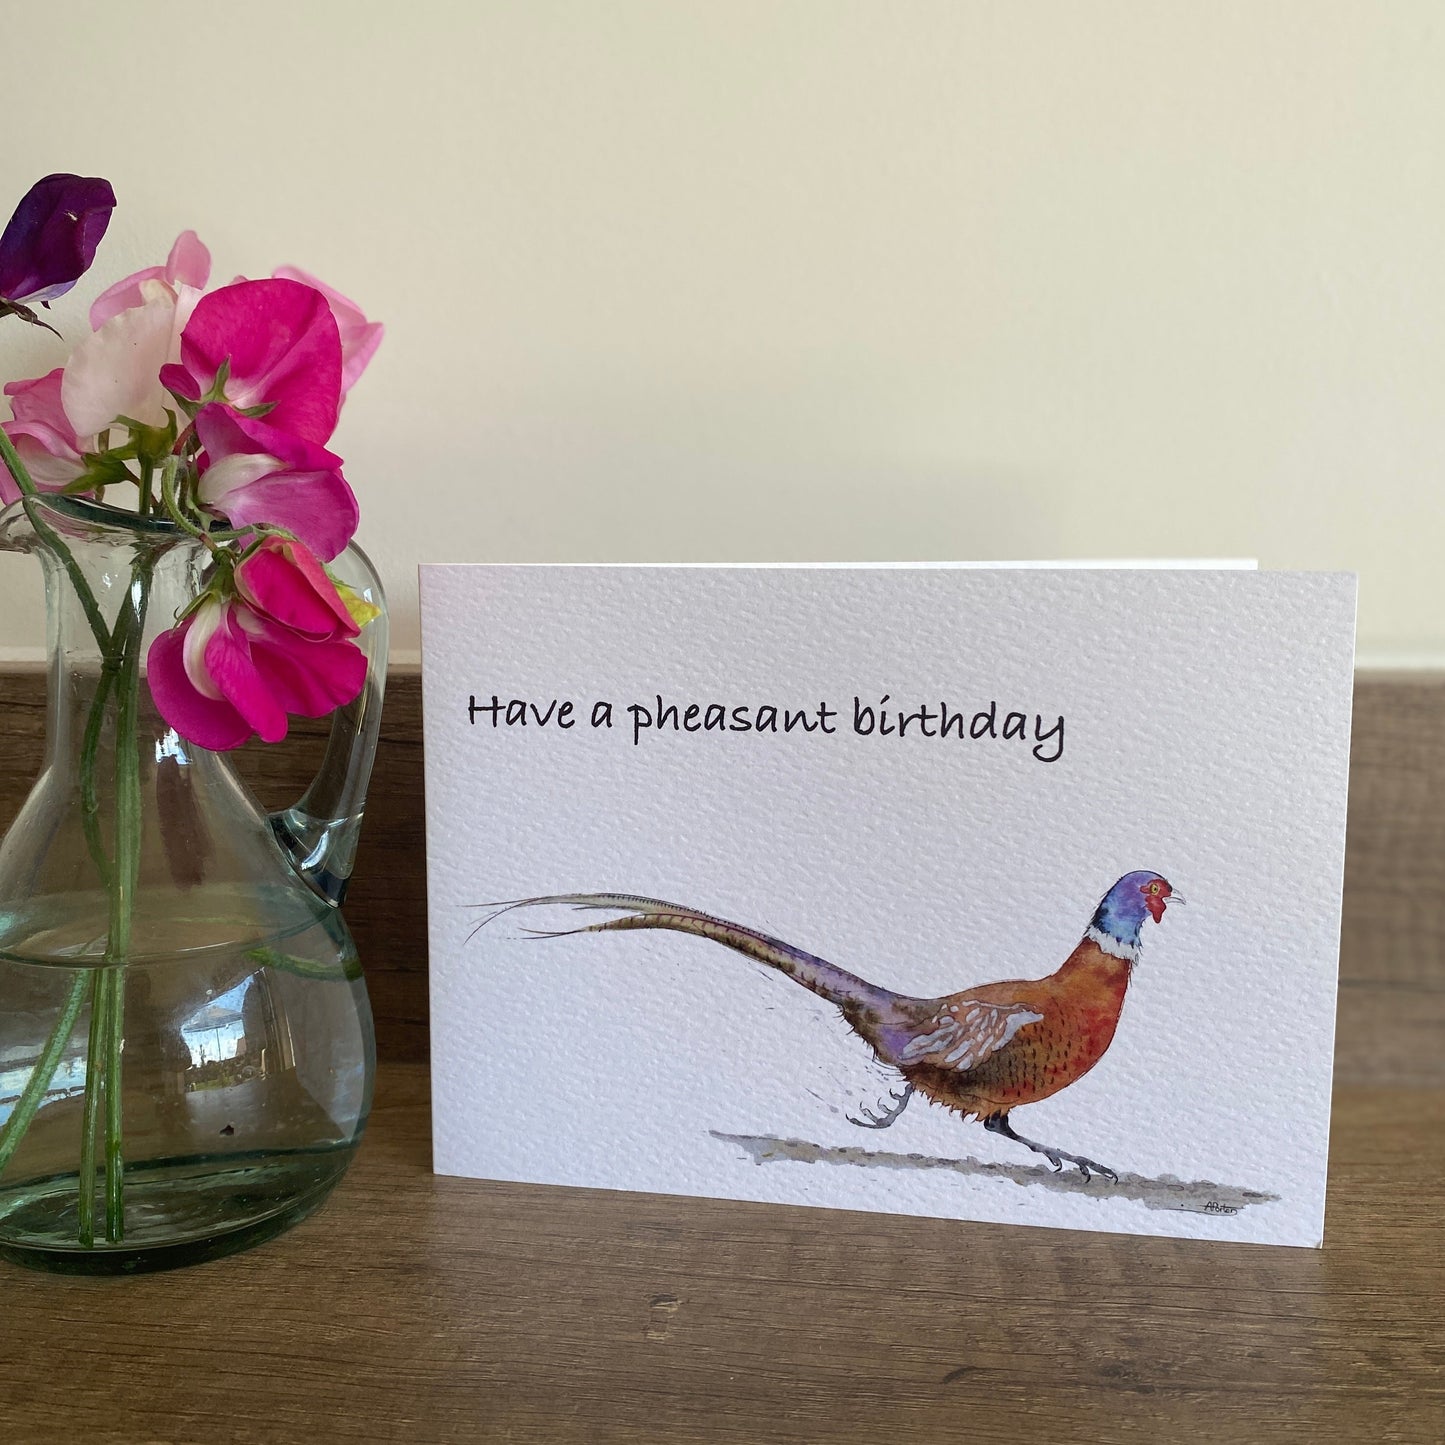 Have a pheasant birthday greetings card. Happy birthday card